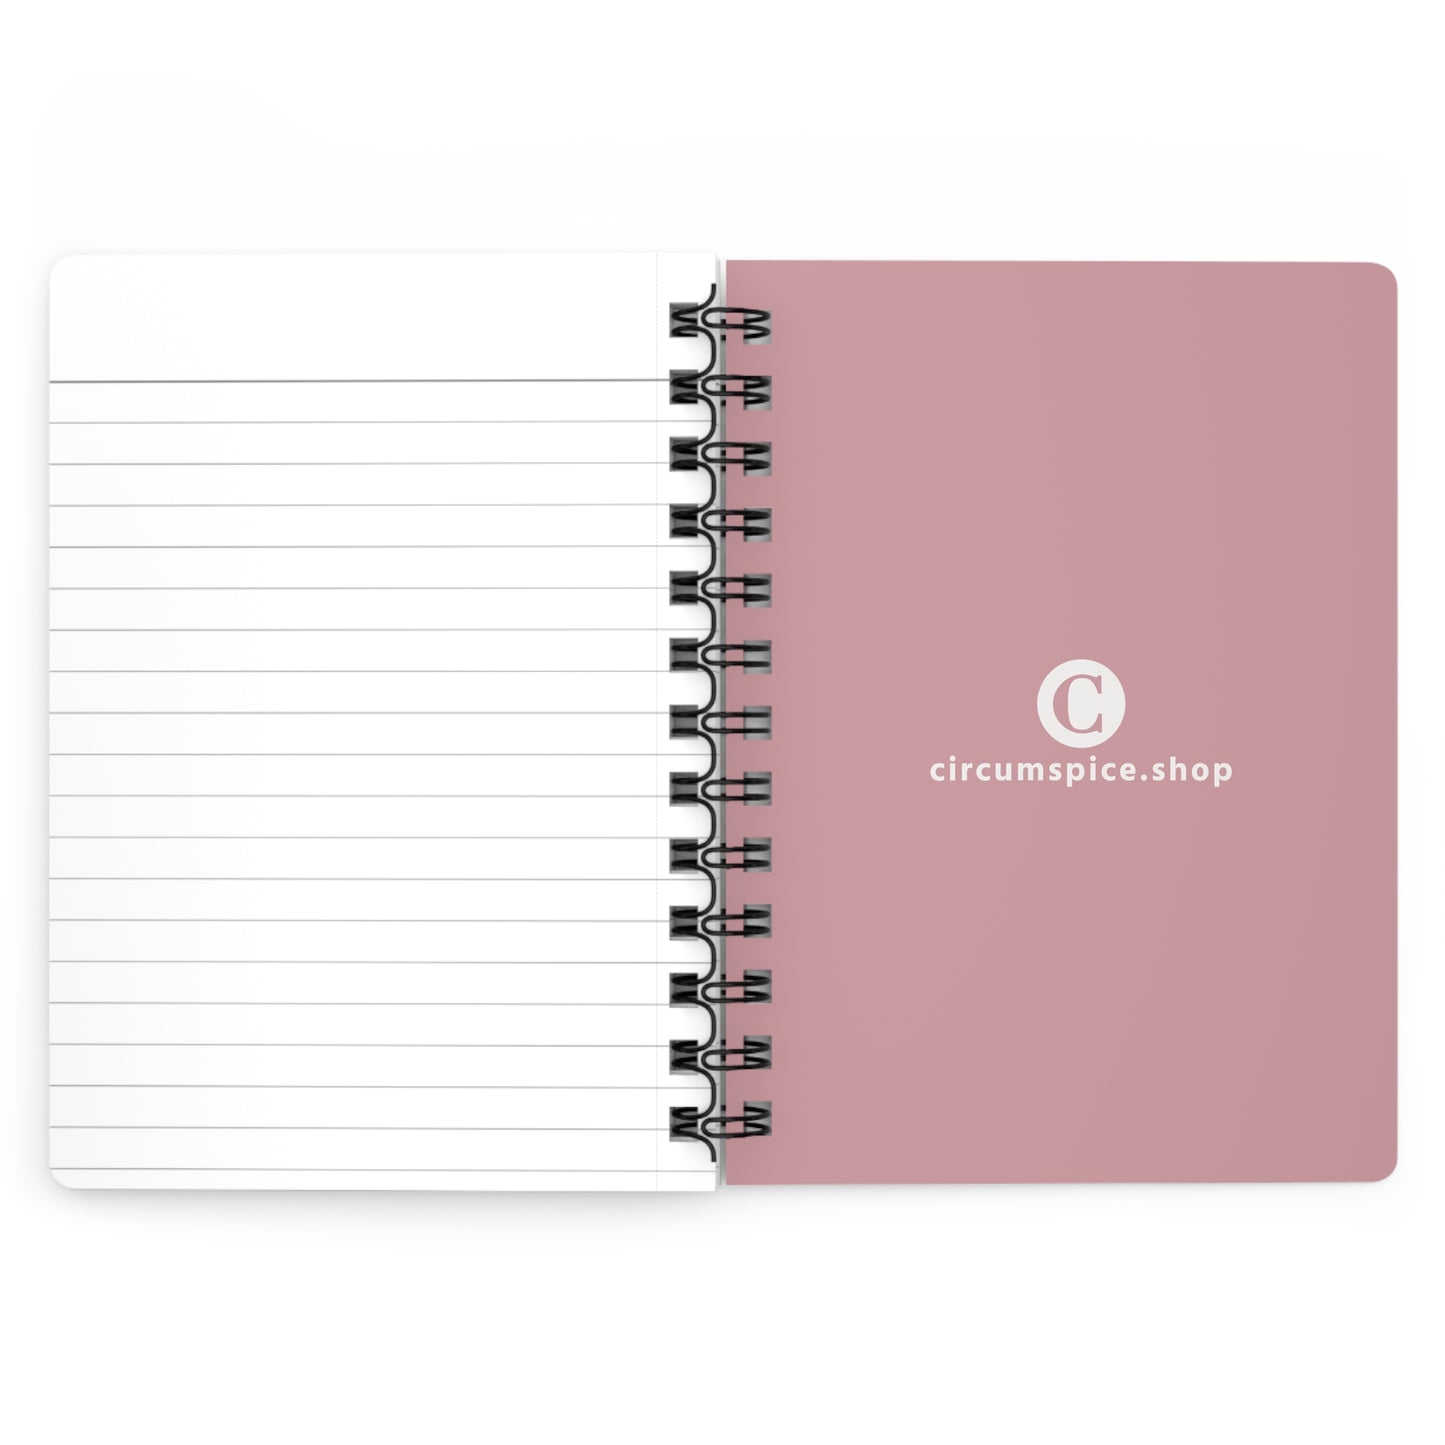 Michigan Upper Peninsula Compact Notebook (w/ UP USA Flag ) | Cherry Blossom Pink